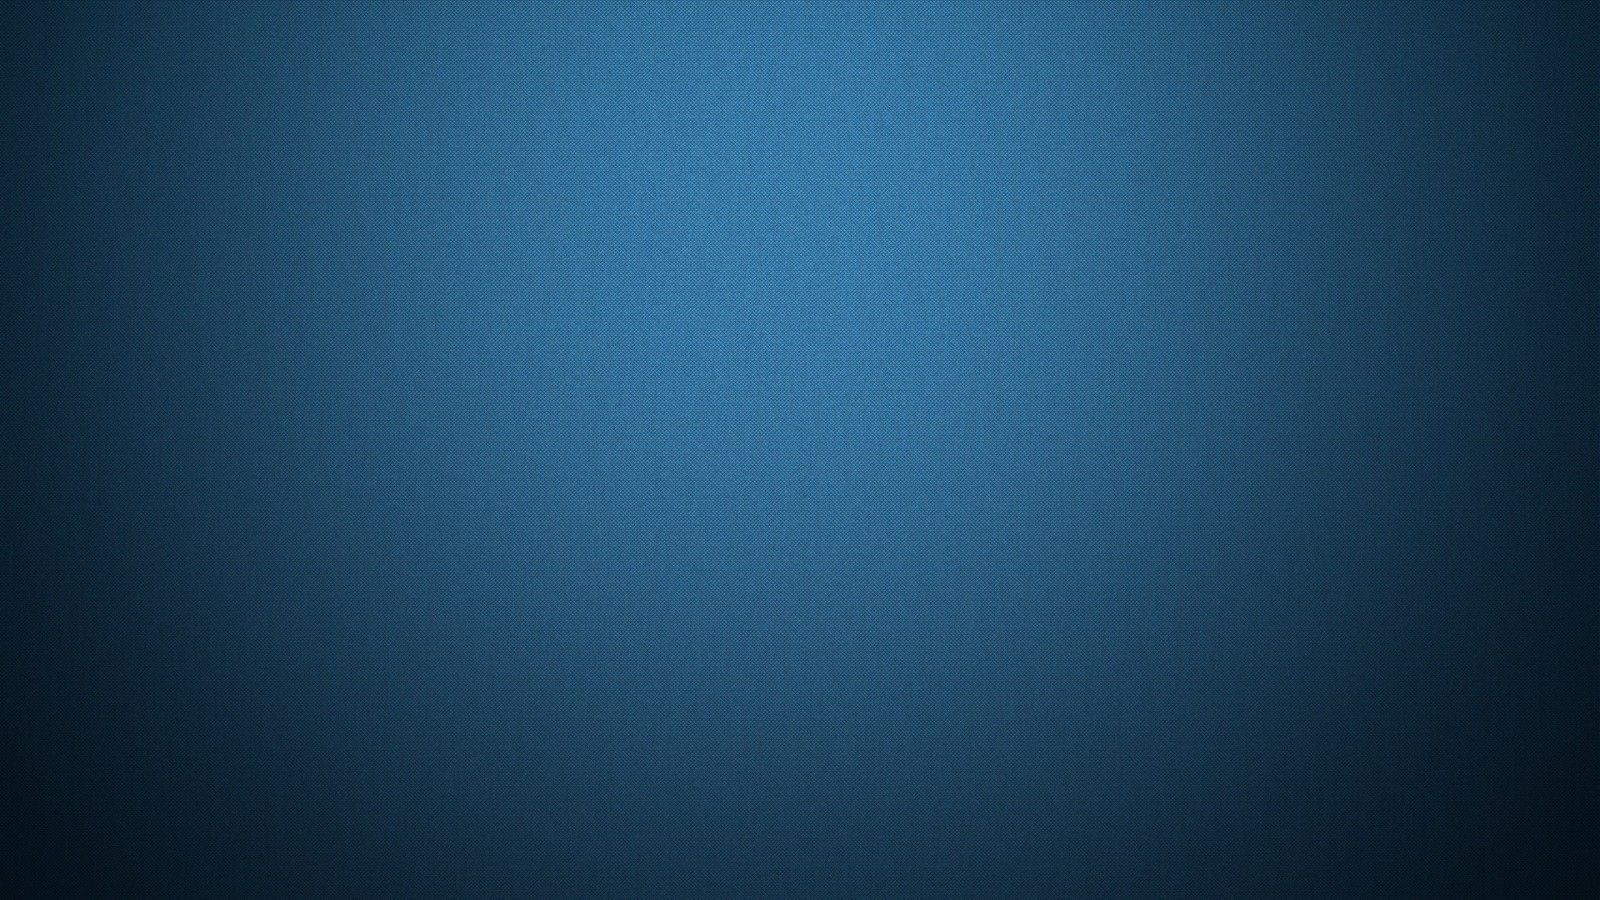 Solid color blue background